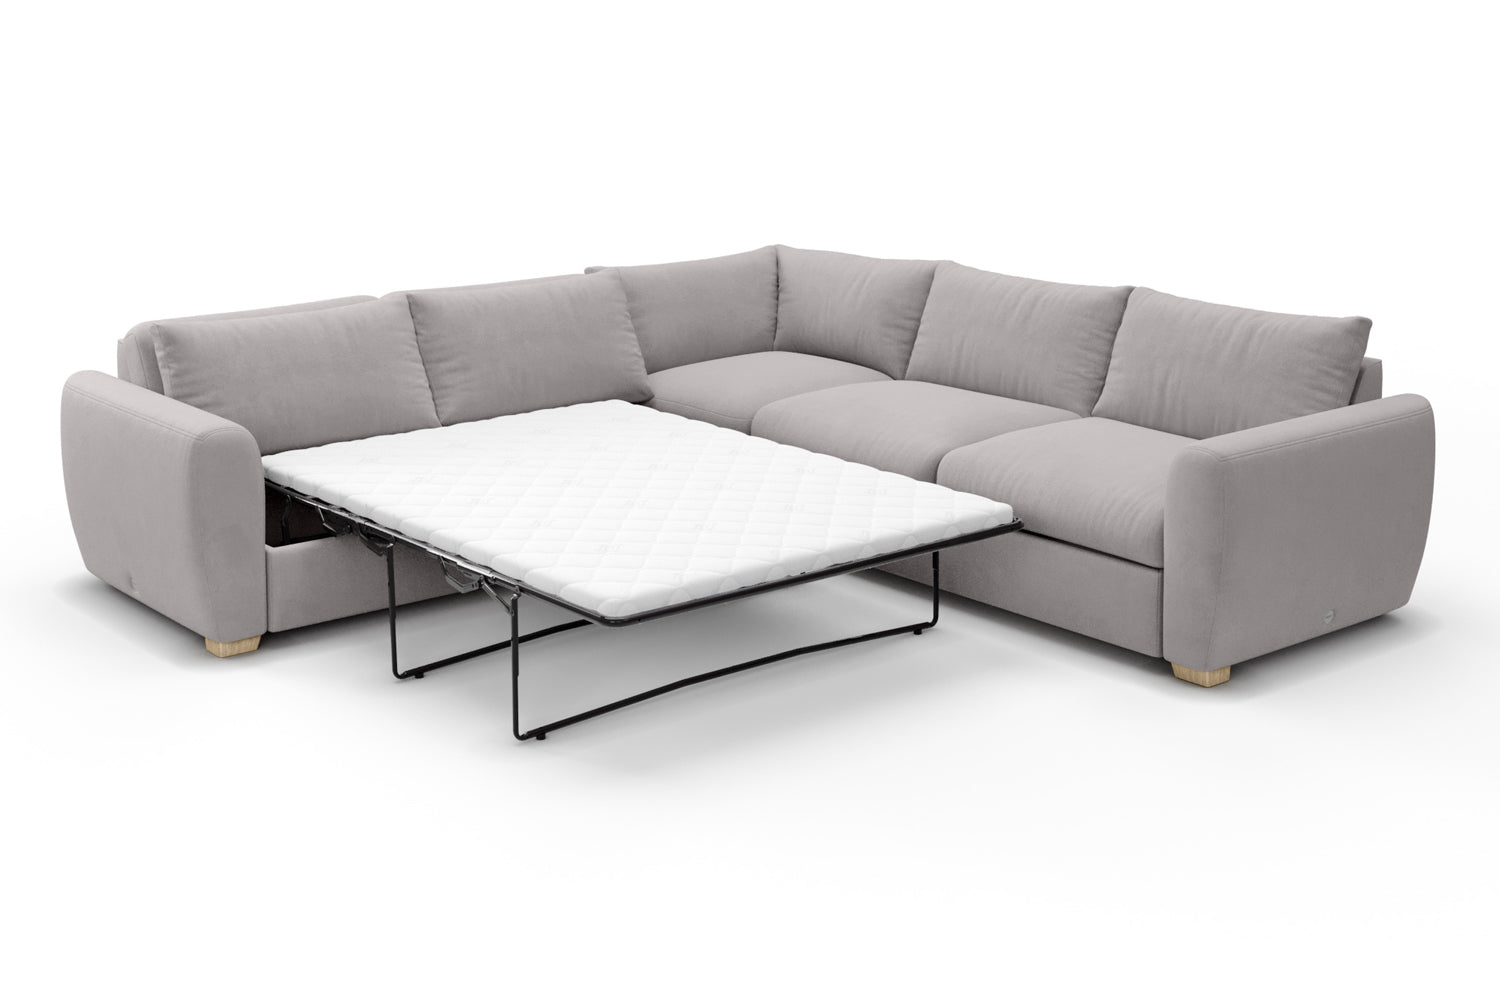 SNUG | The Cloud Sundae Corner Sofa Bed in Warm Grey